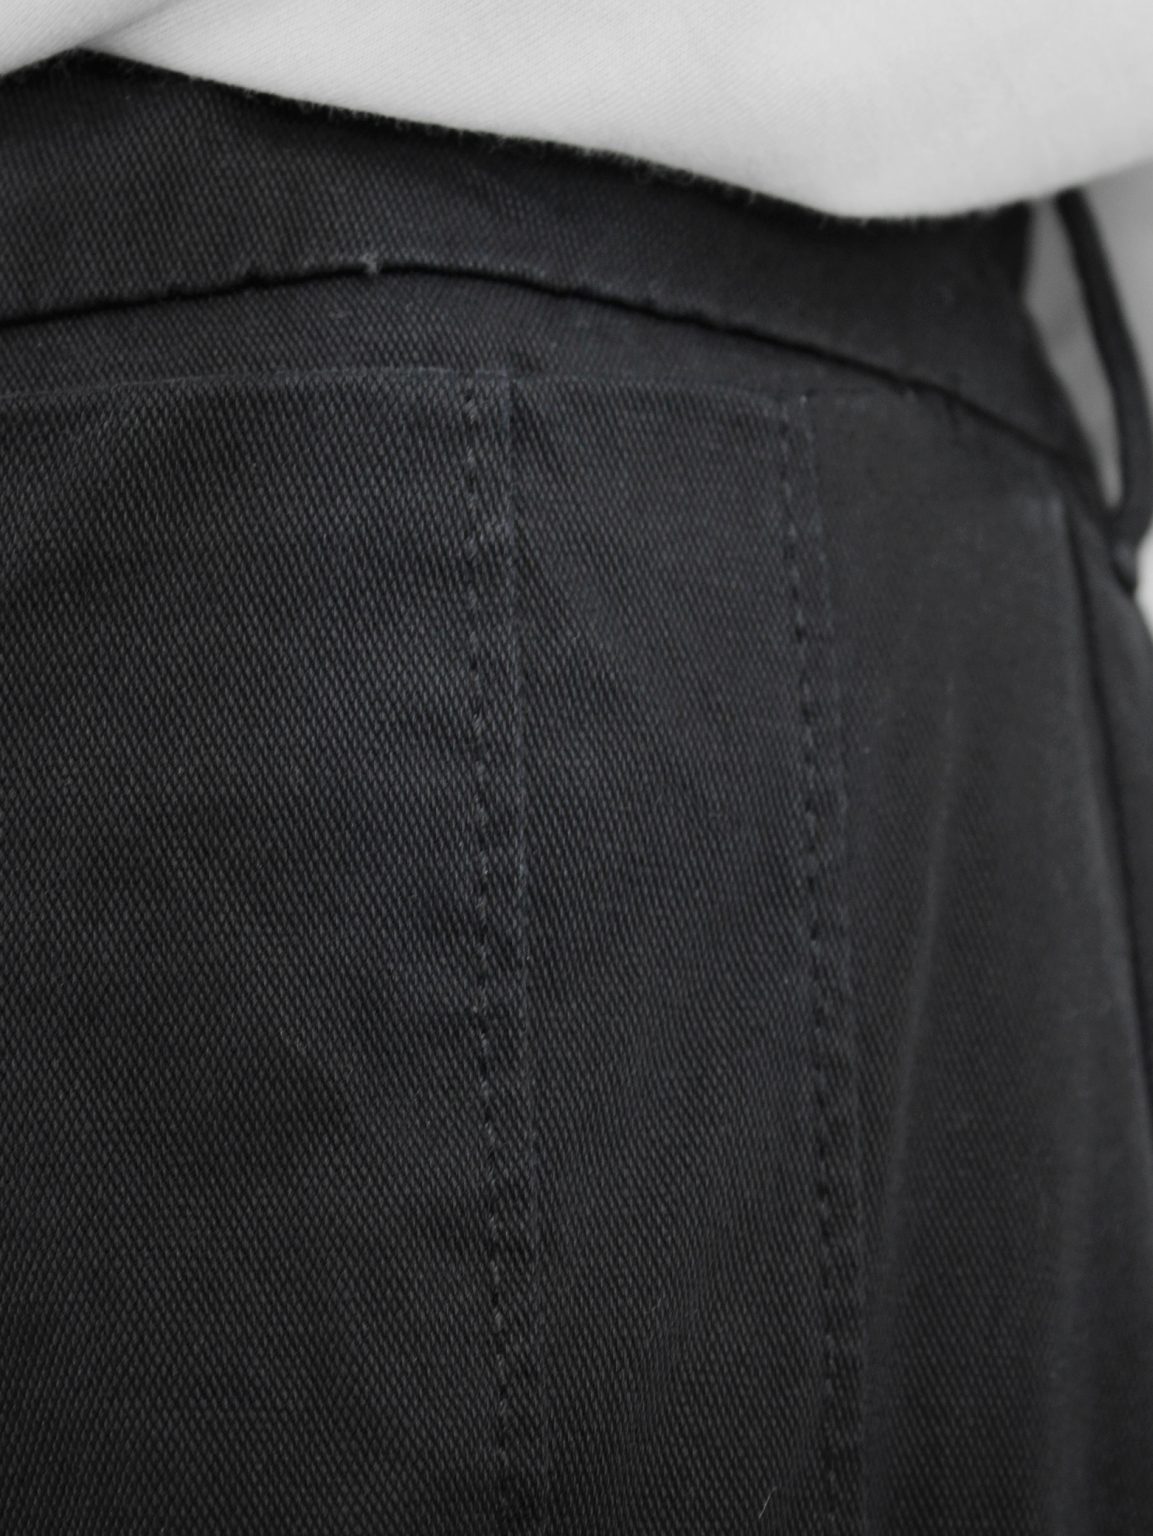 Maison Martin Margiela replica black masculine trousers — spring 2006